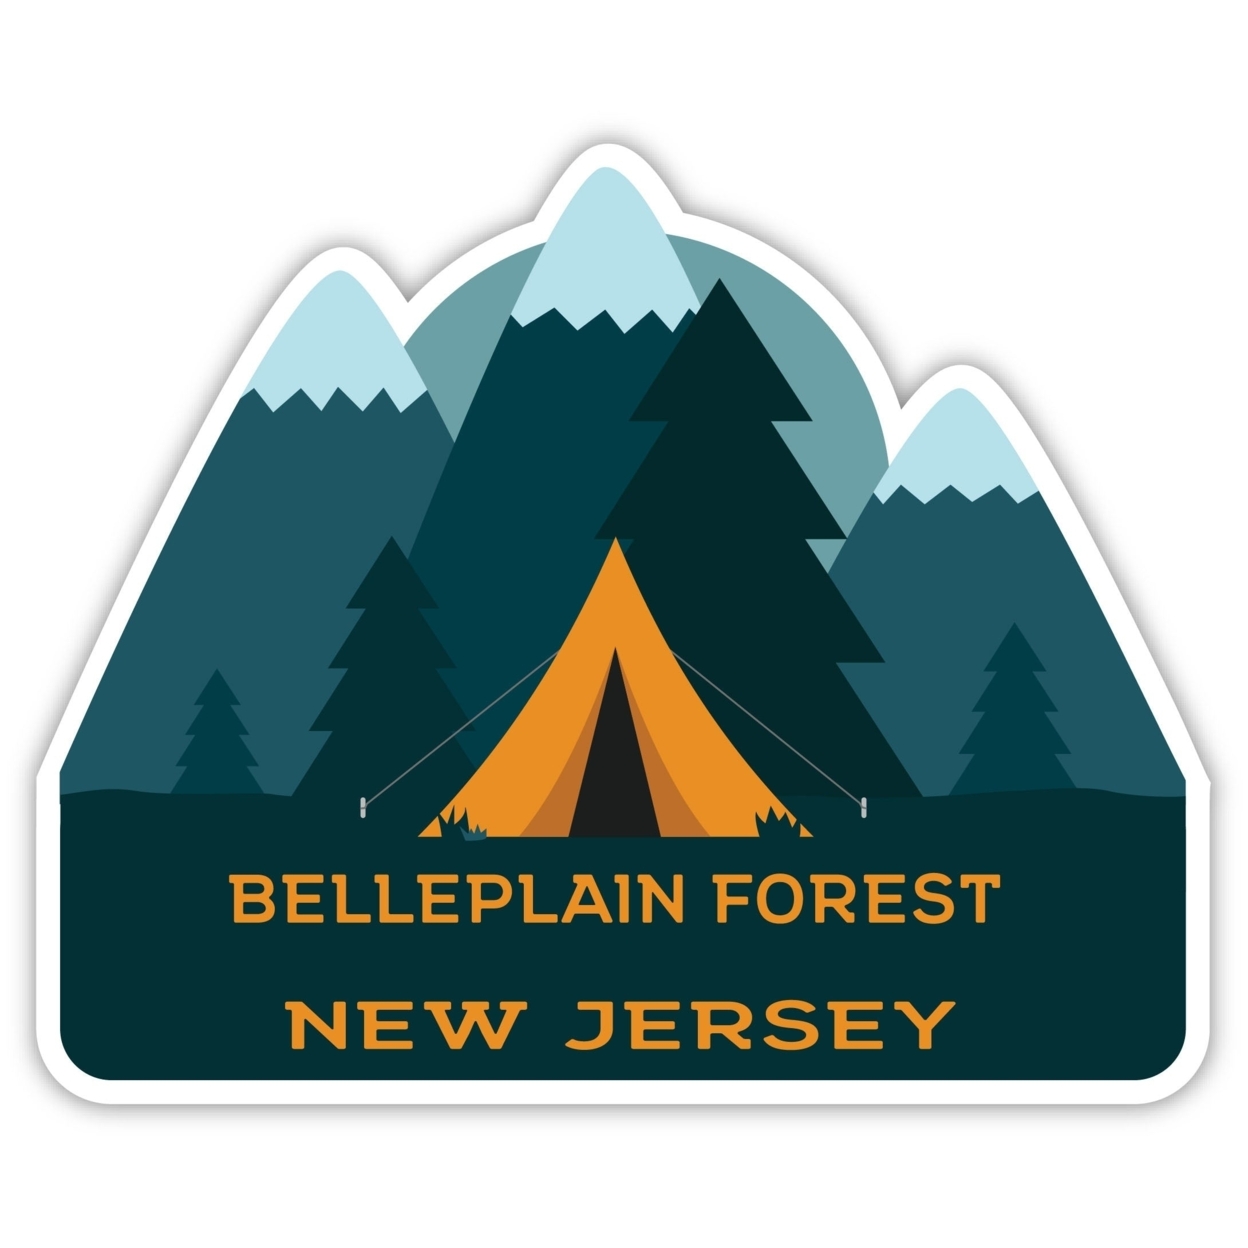 Belleplain Forest New Jersey Souvenir Decorative Stickers (Choose Theme And Size) - Single Unit, 8-Inch, Tent